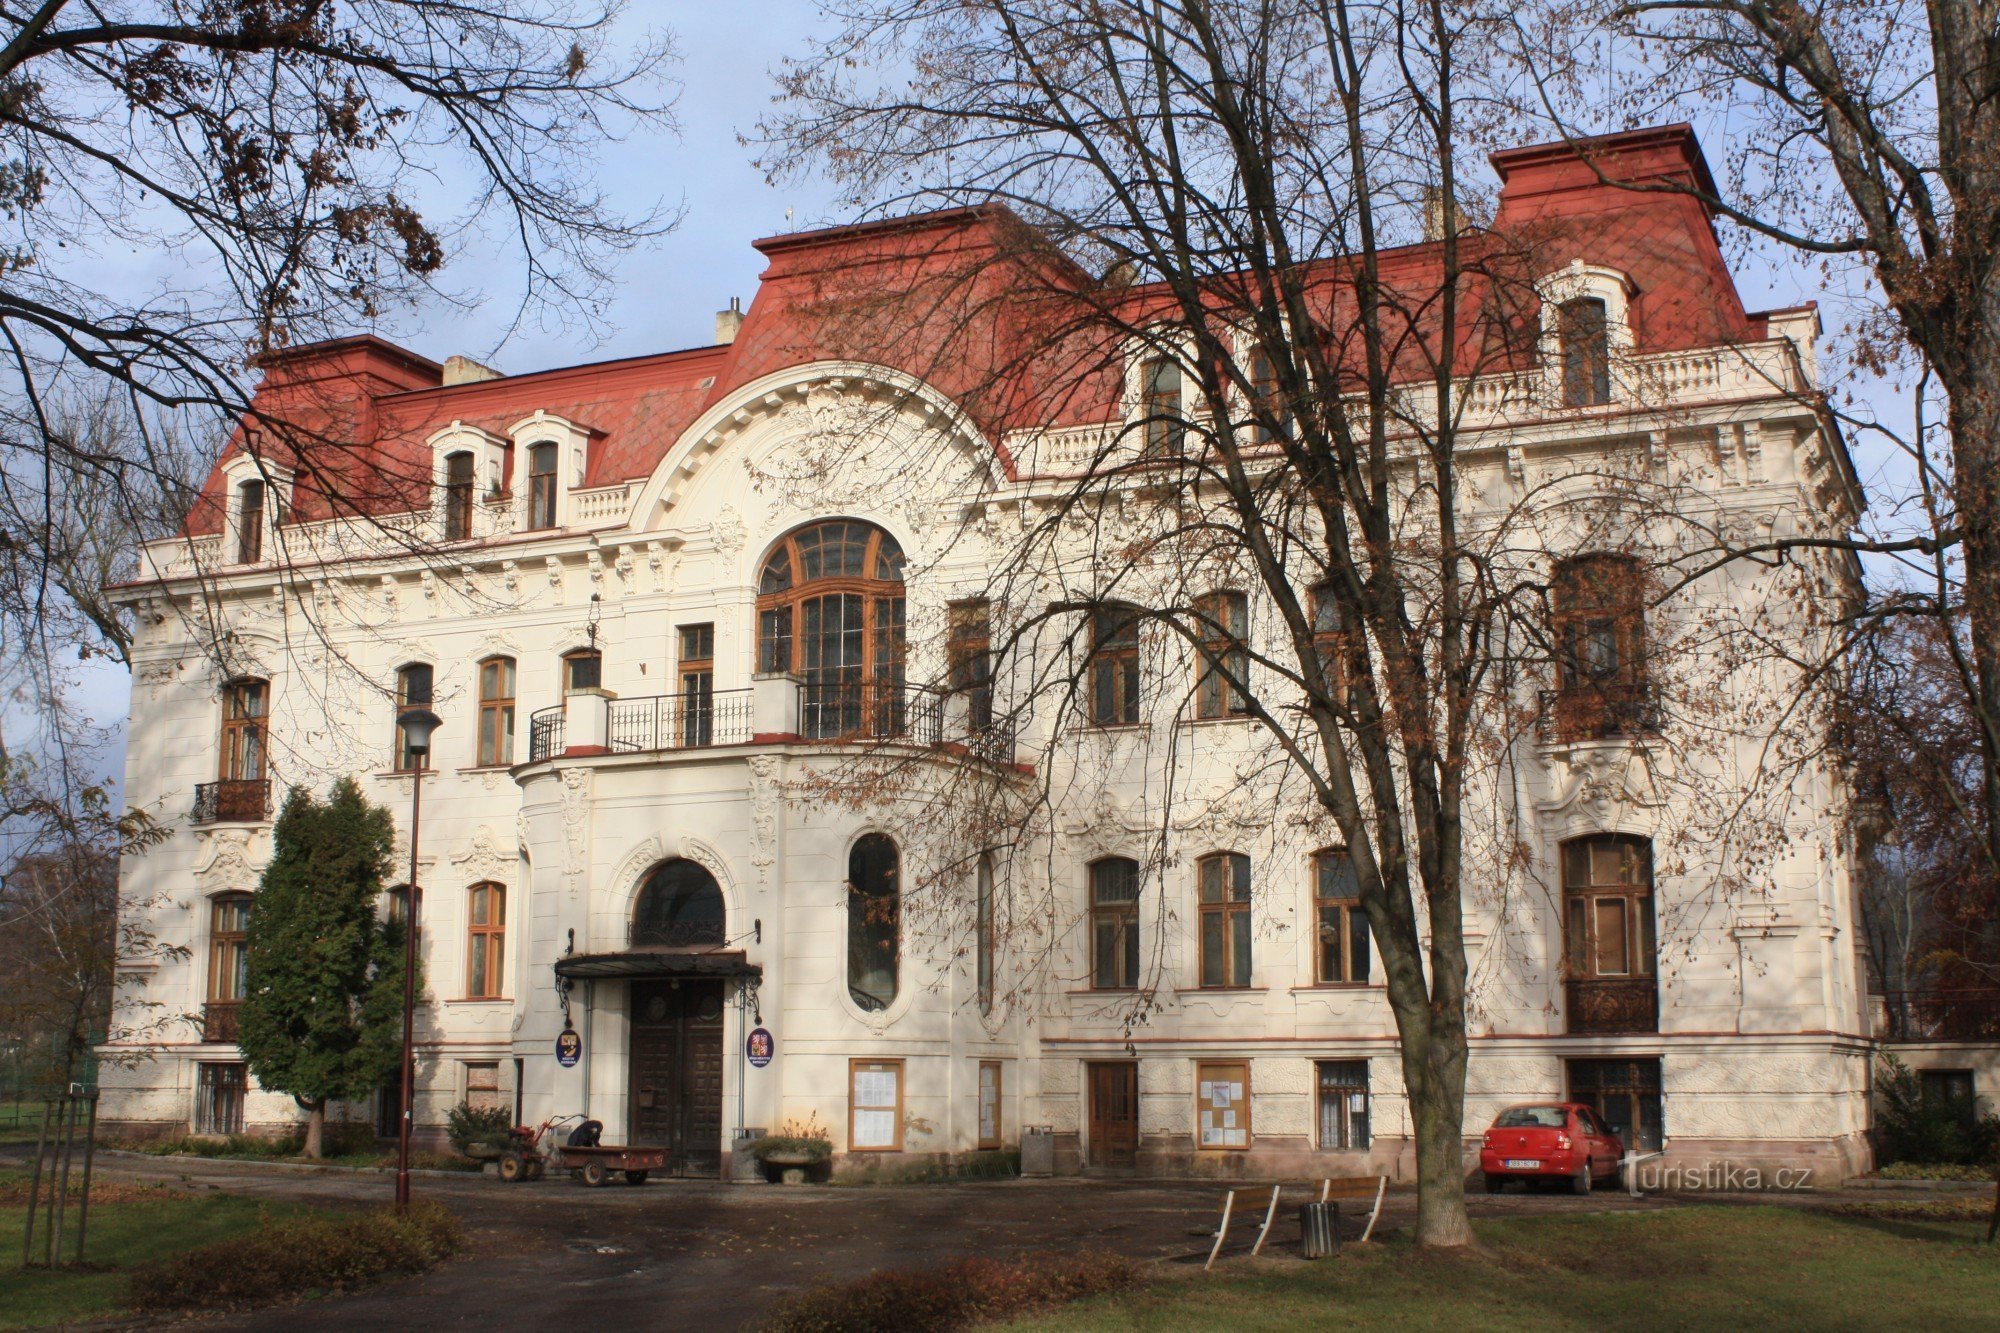 Svitavka - stadskontoret ligger i villan idag